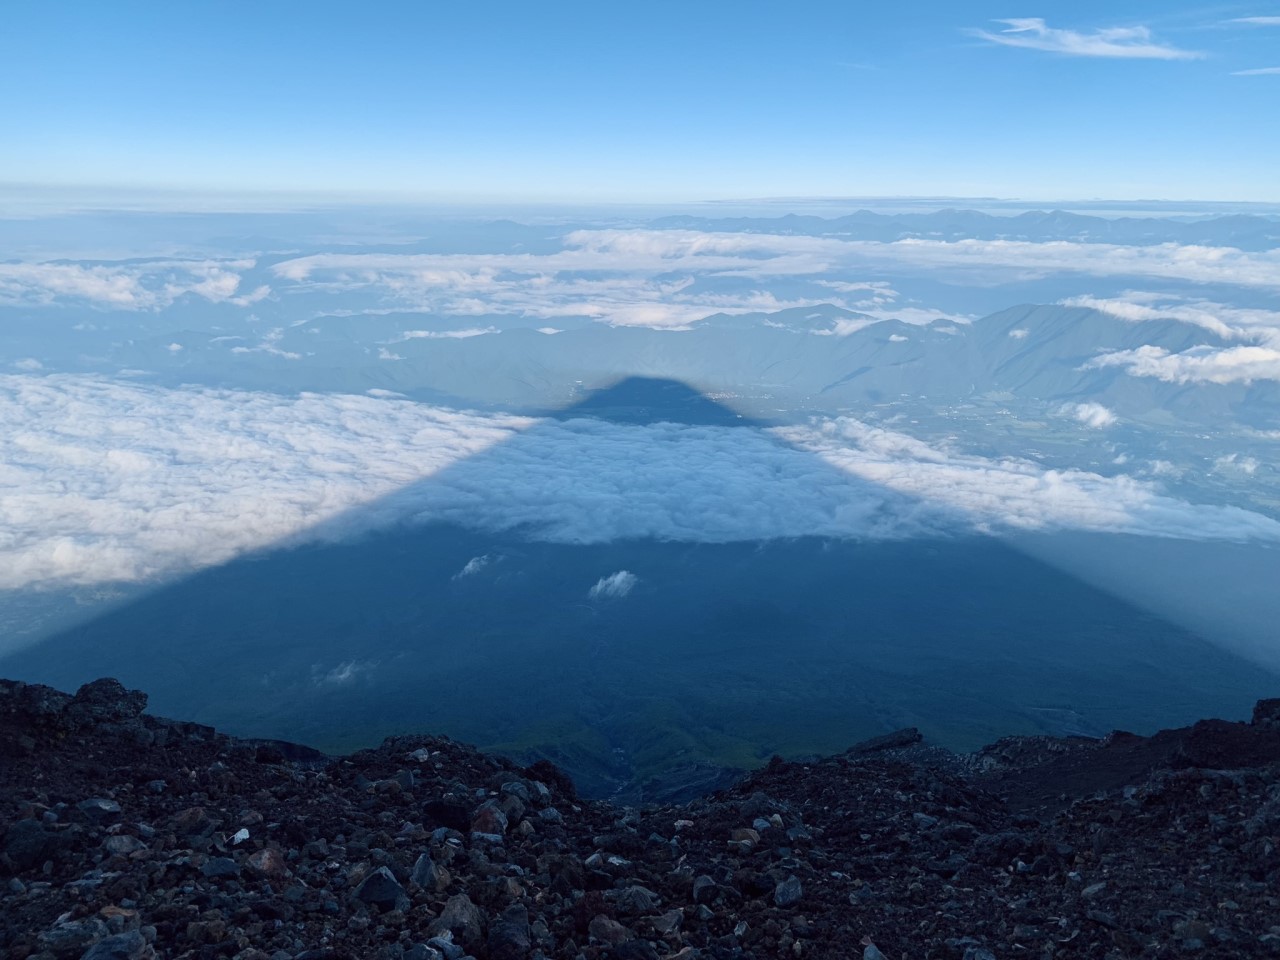 Climbing Mount Fuji from the bottom